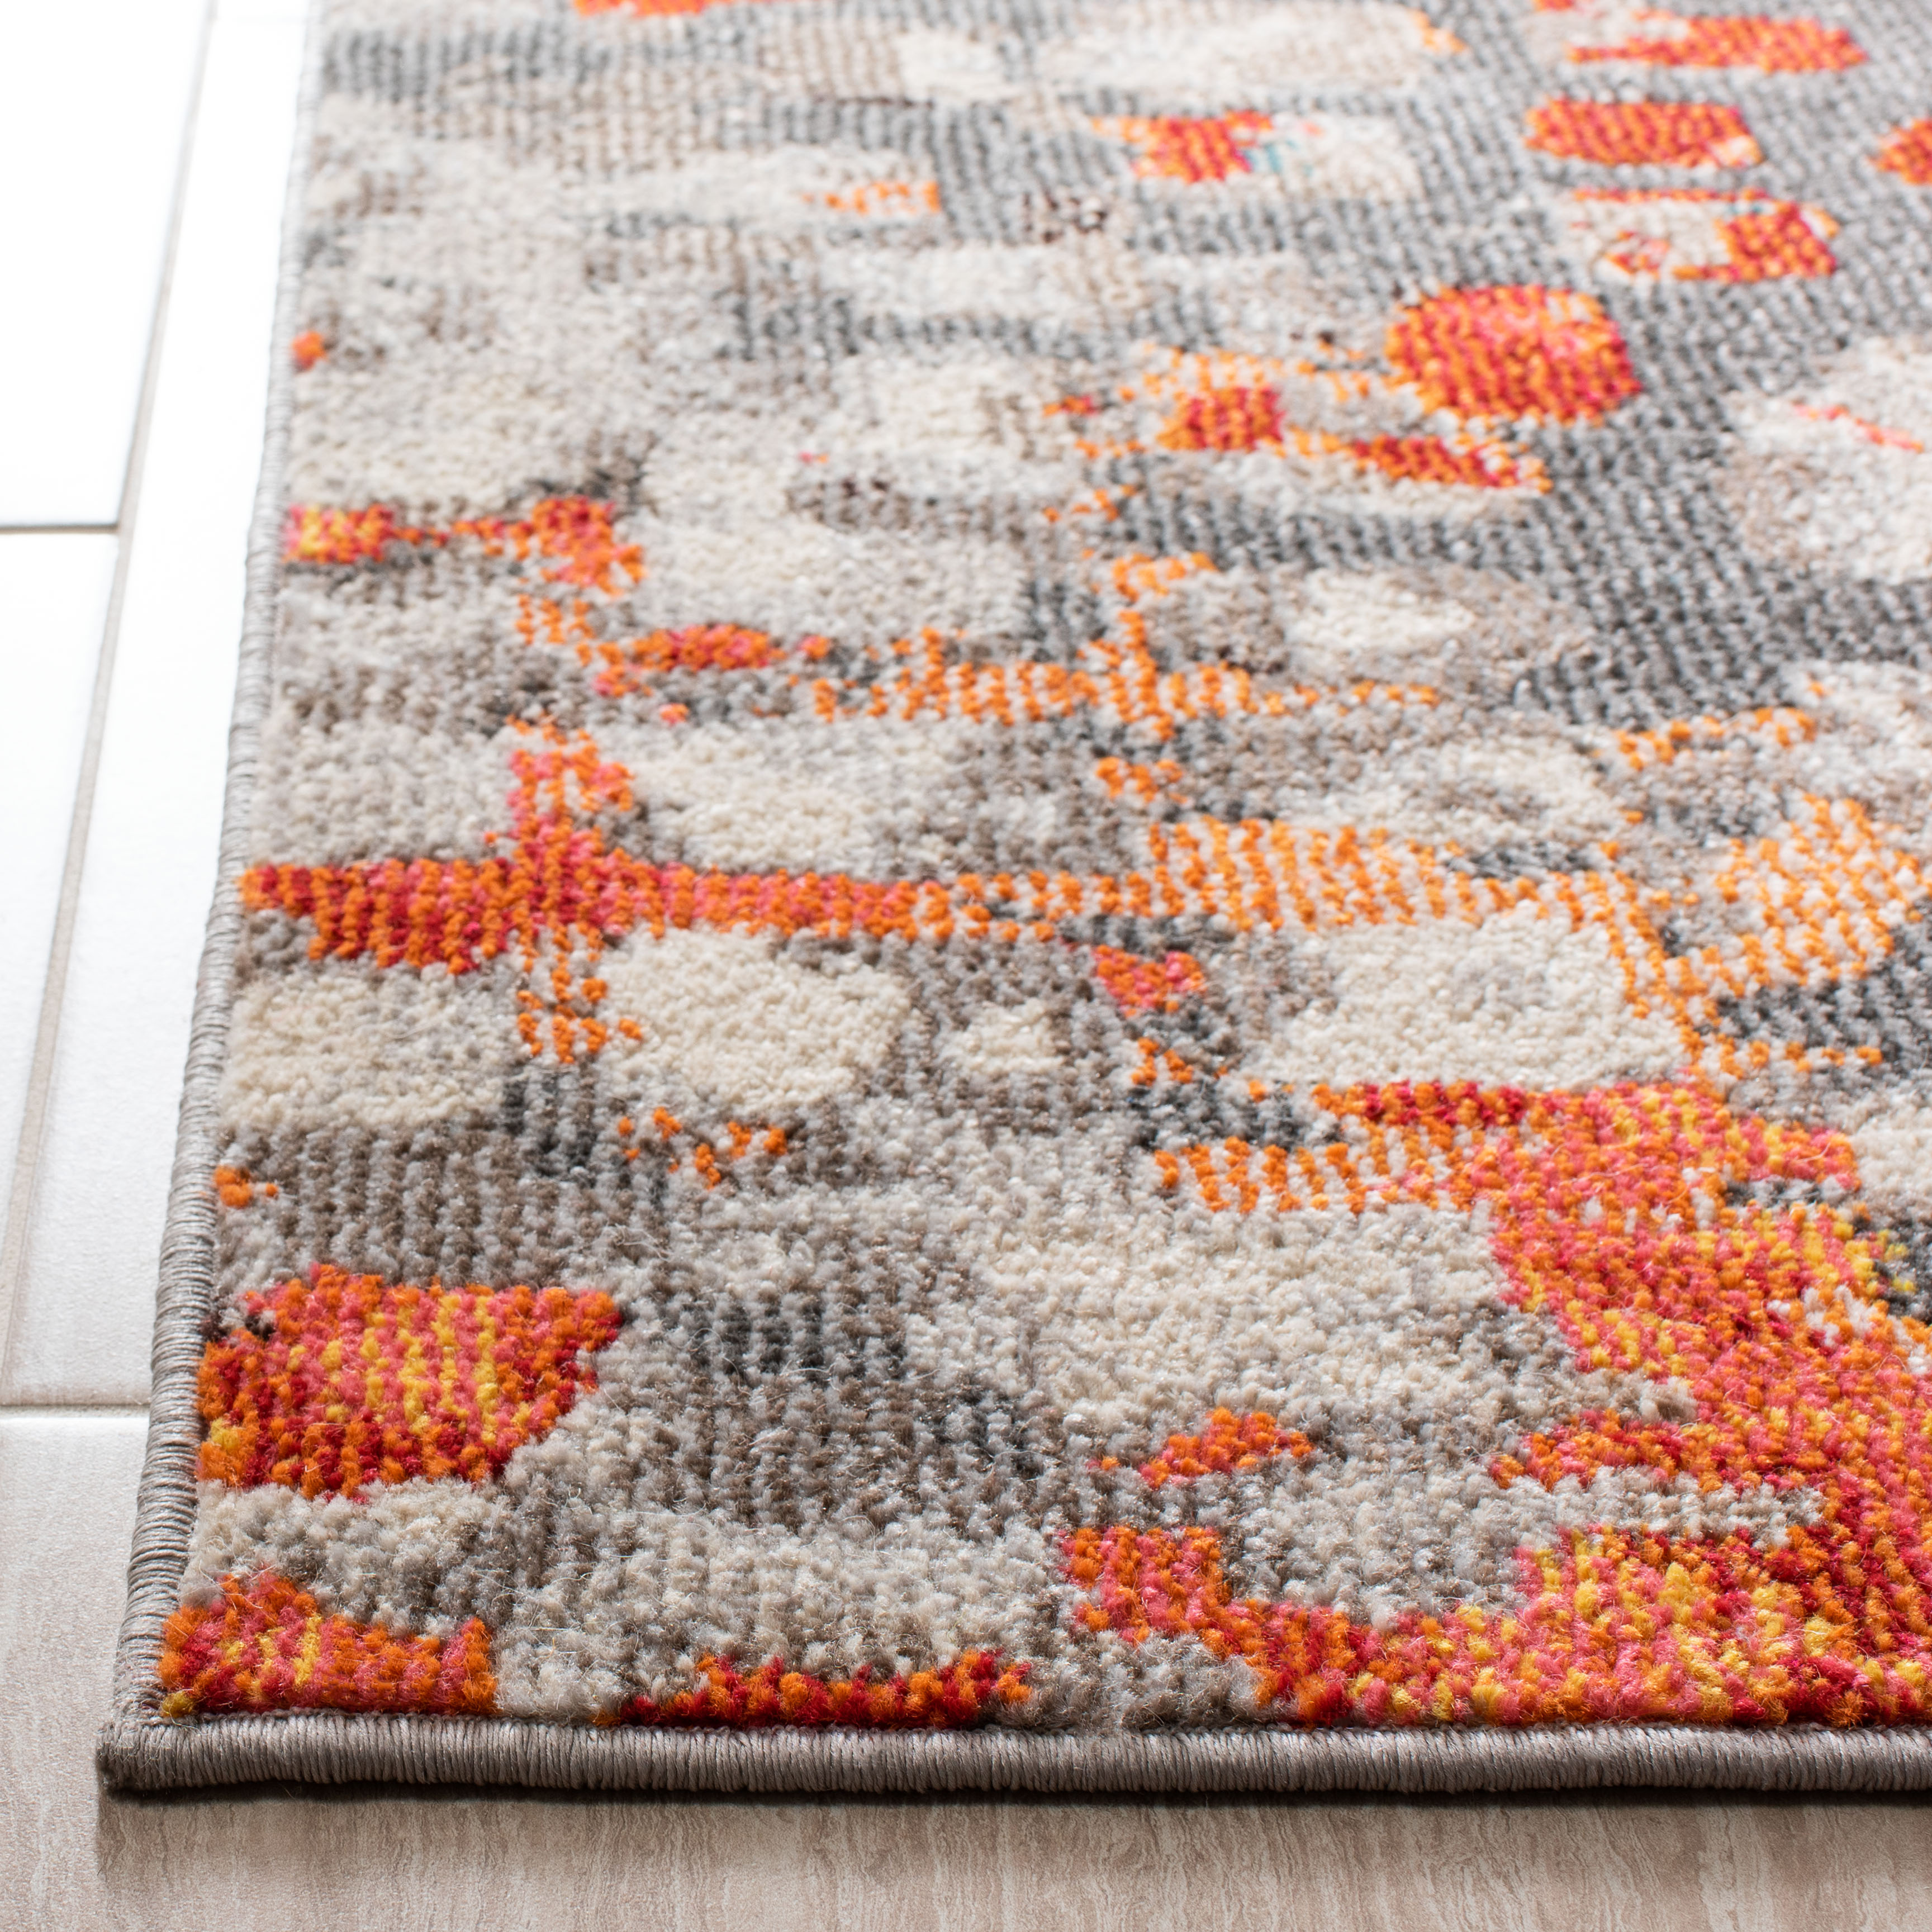 SAFAVIEH Madison Candelario Abstract Polka Dots Area Rug, Grey/Orange, 6' x 9' - image 5 of 9